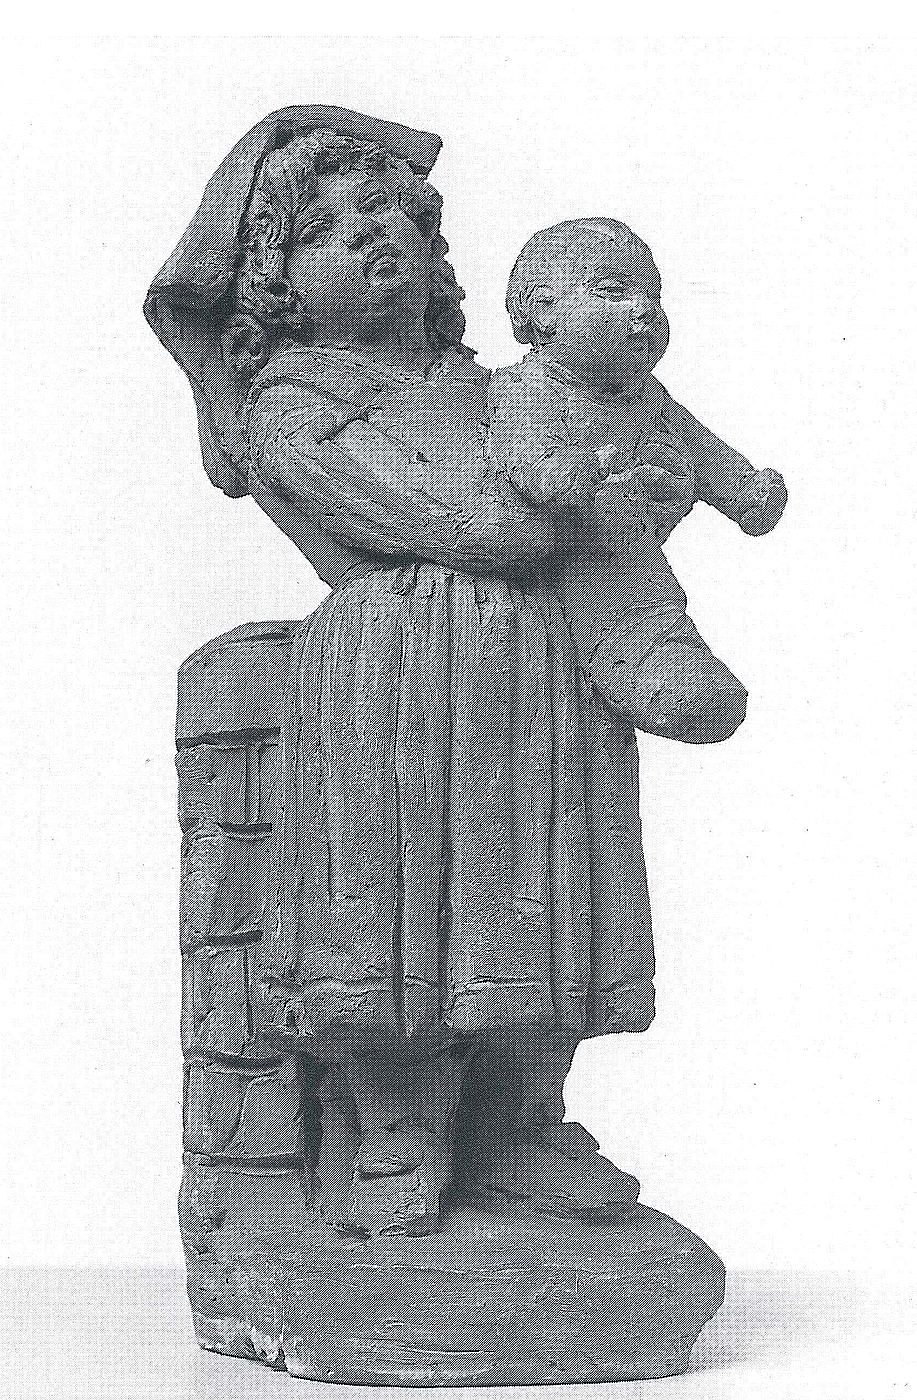 L. Prior: Lille romersk pige med bambino